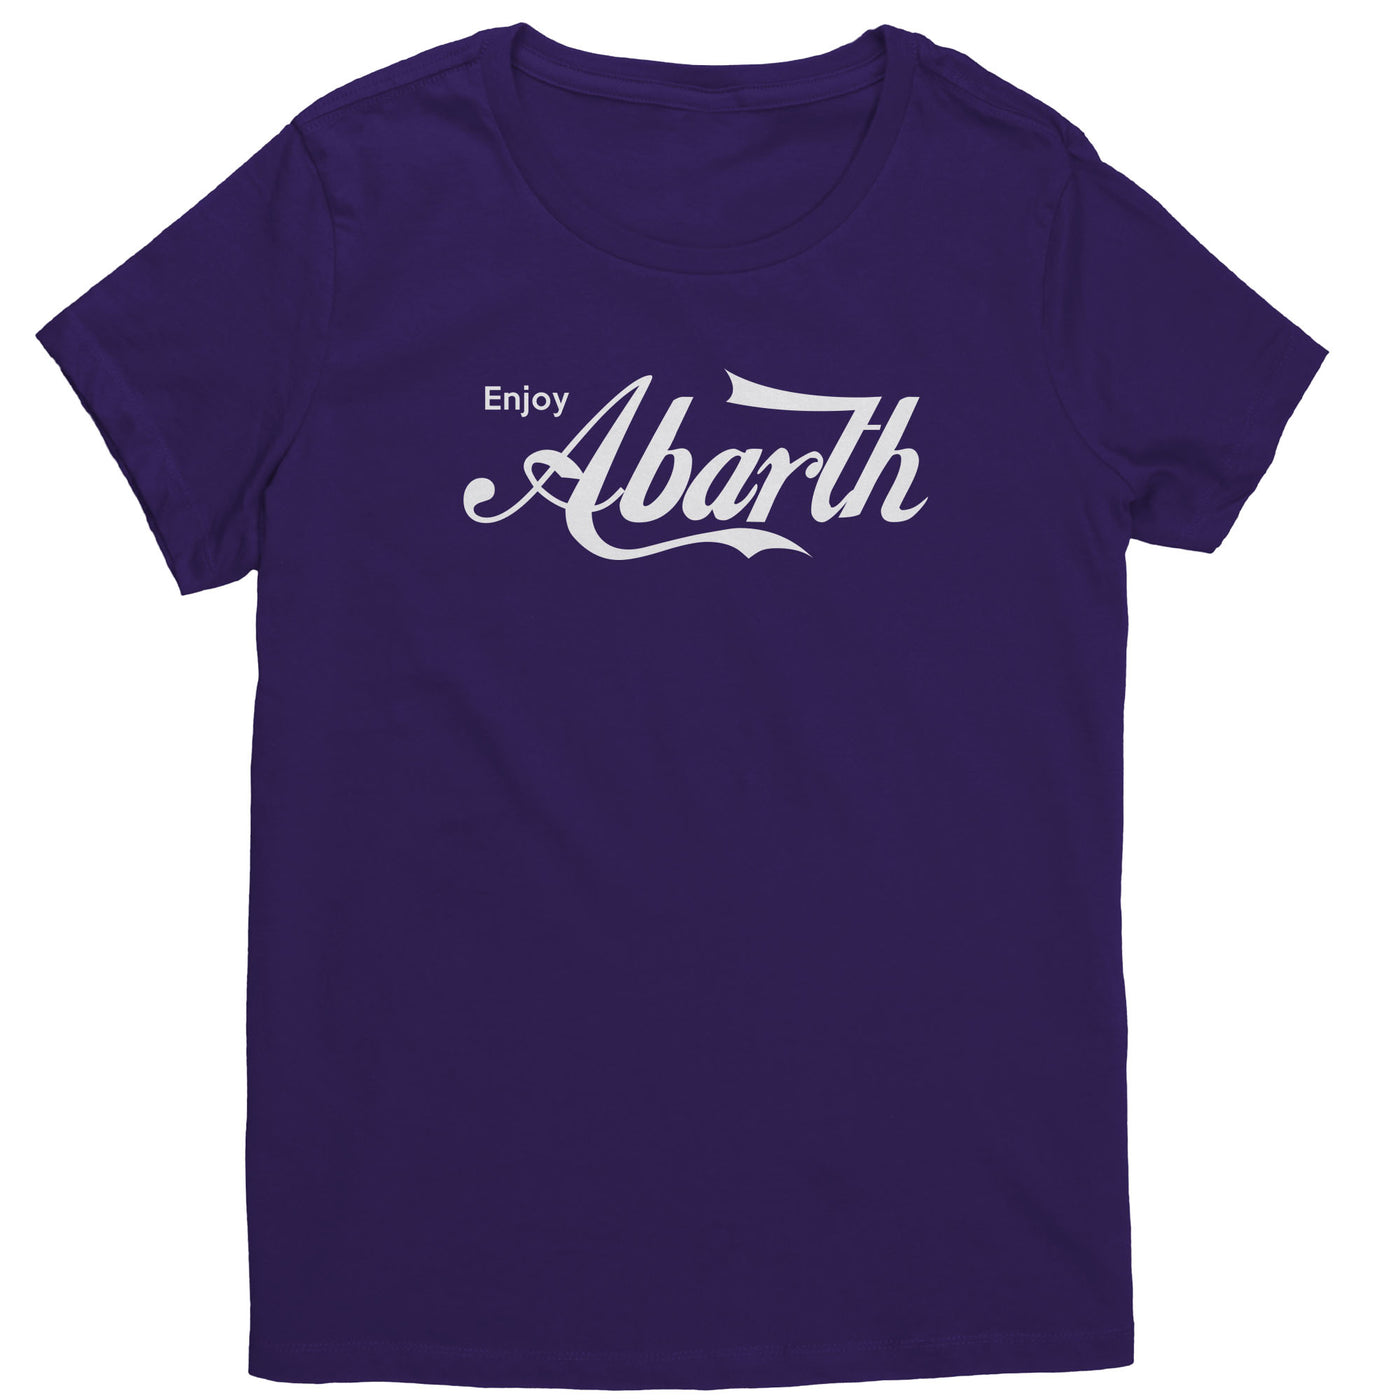 enjoy-abarth-womens-shirt-purple